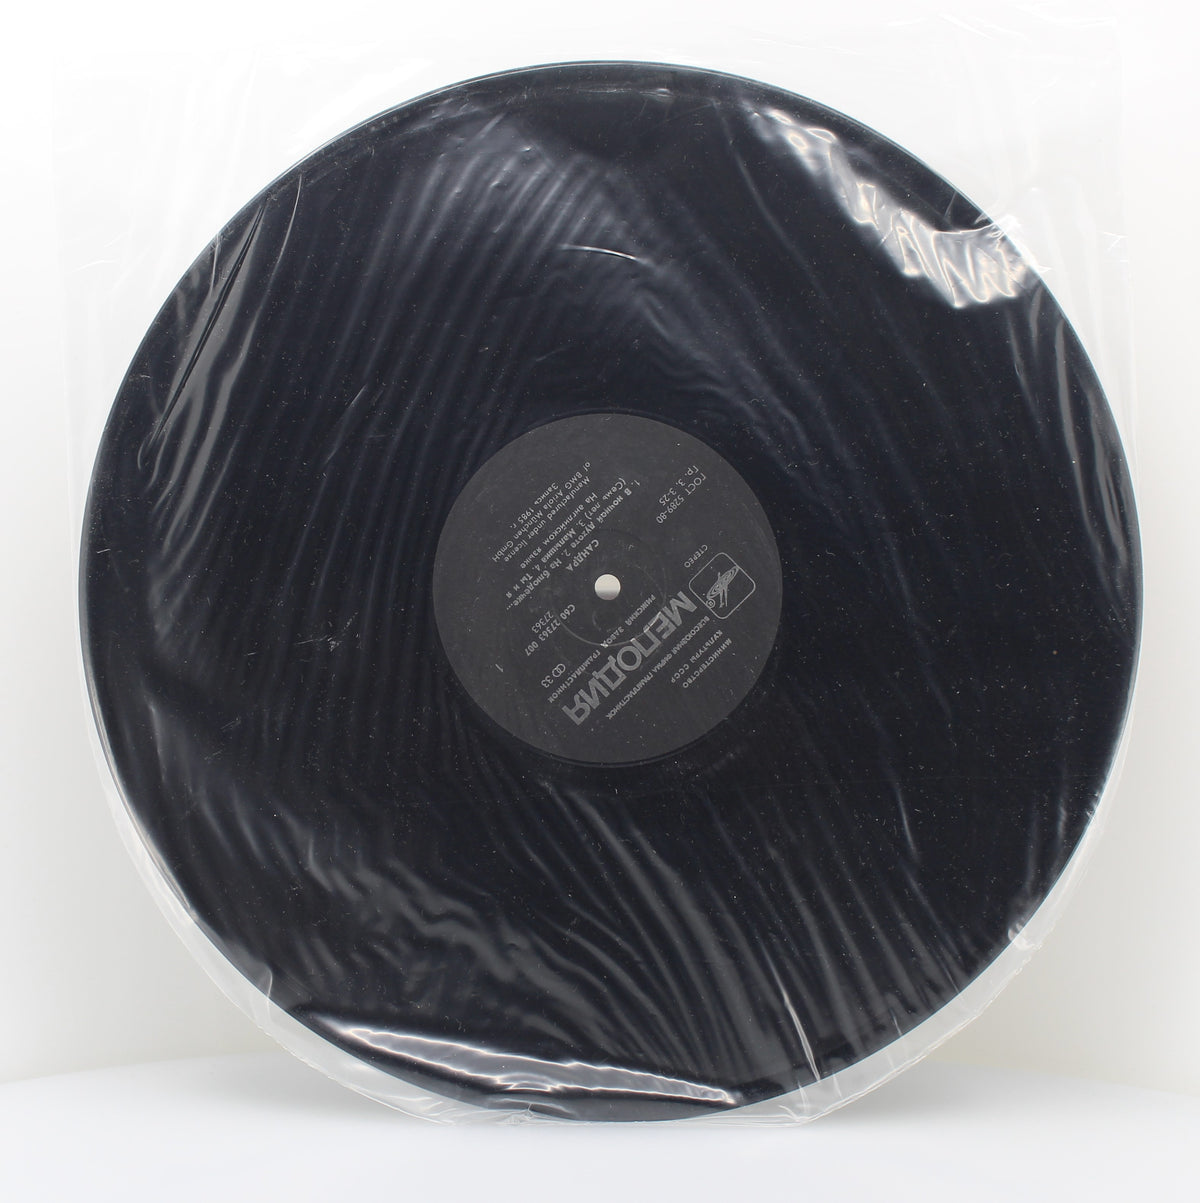 Сандра* ‎– The Long Play, Vinyl, LP, Album, Black Labels (different), VG/VG+, USSR 1988